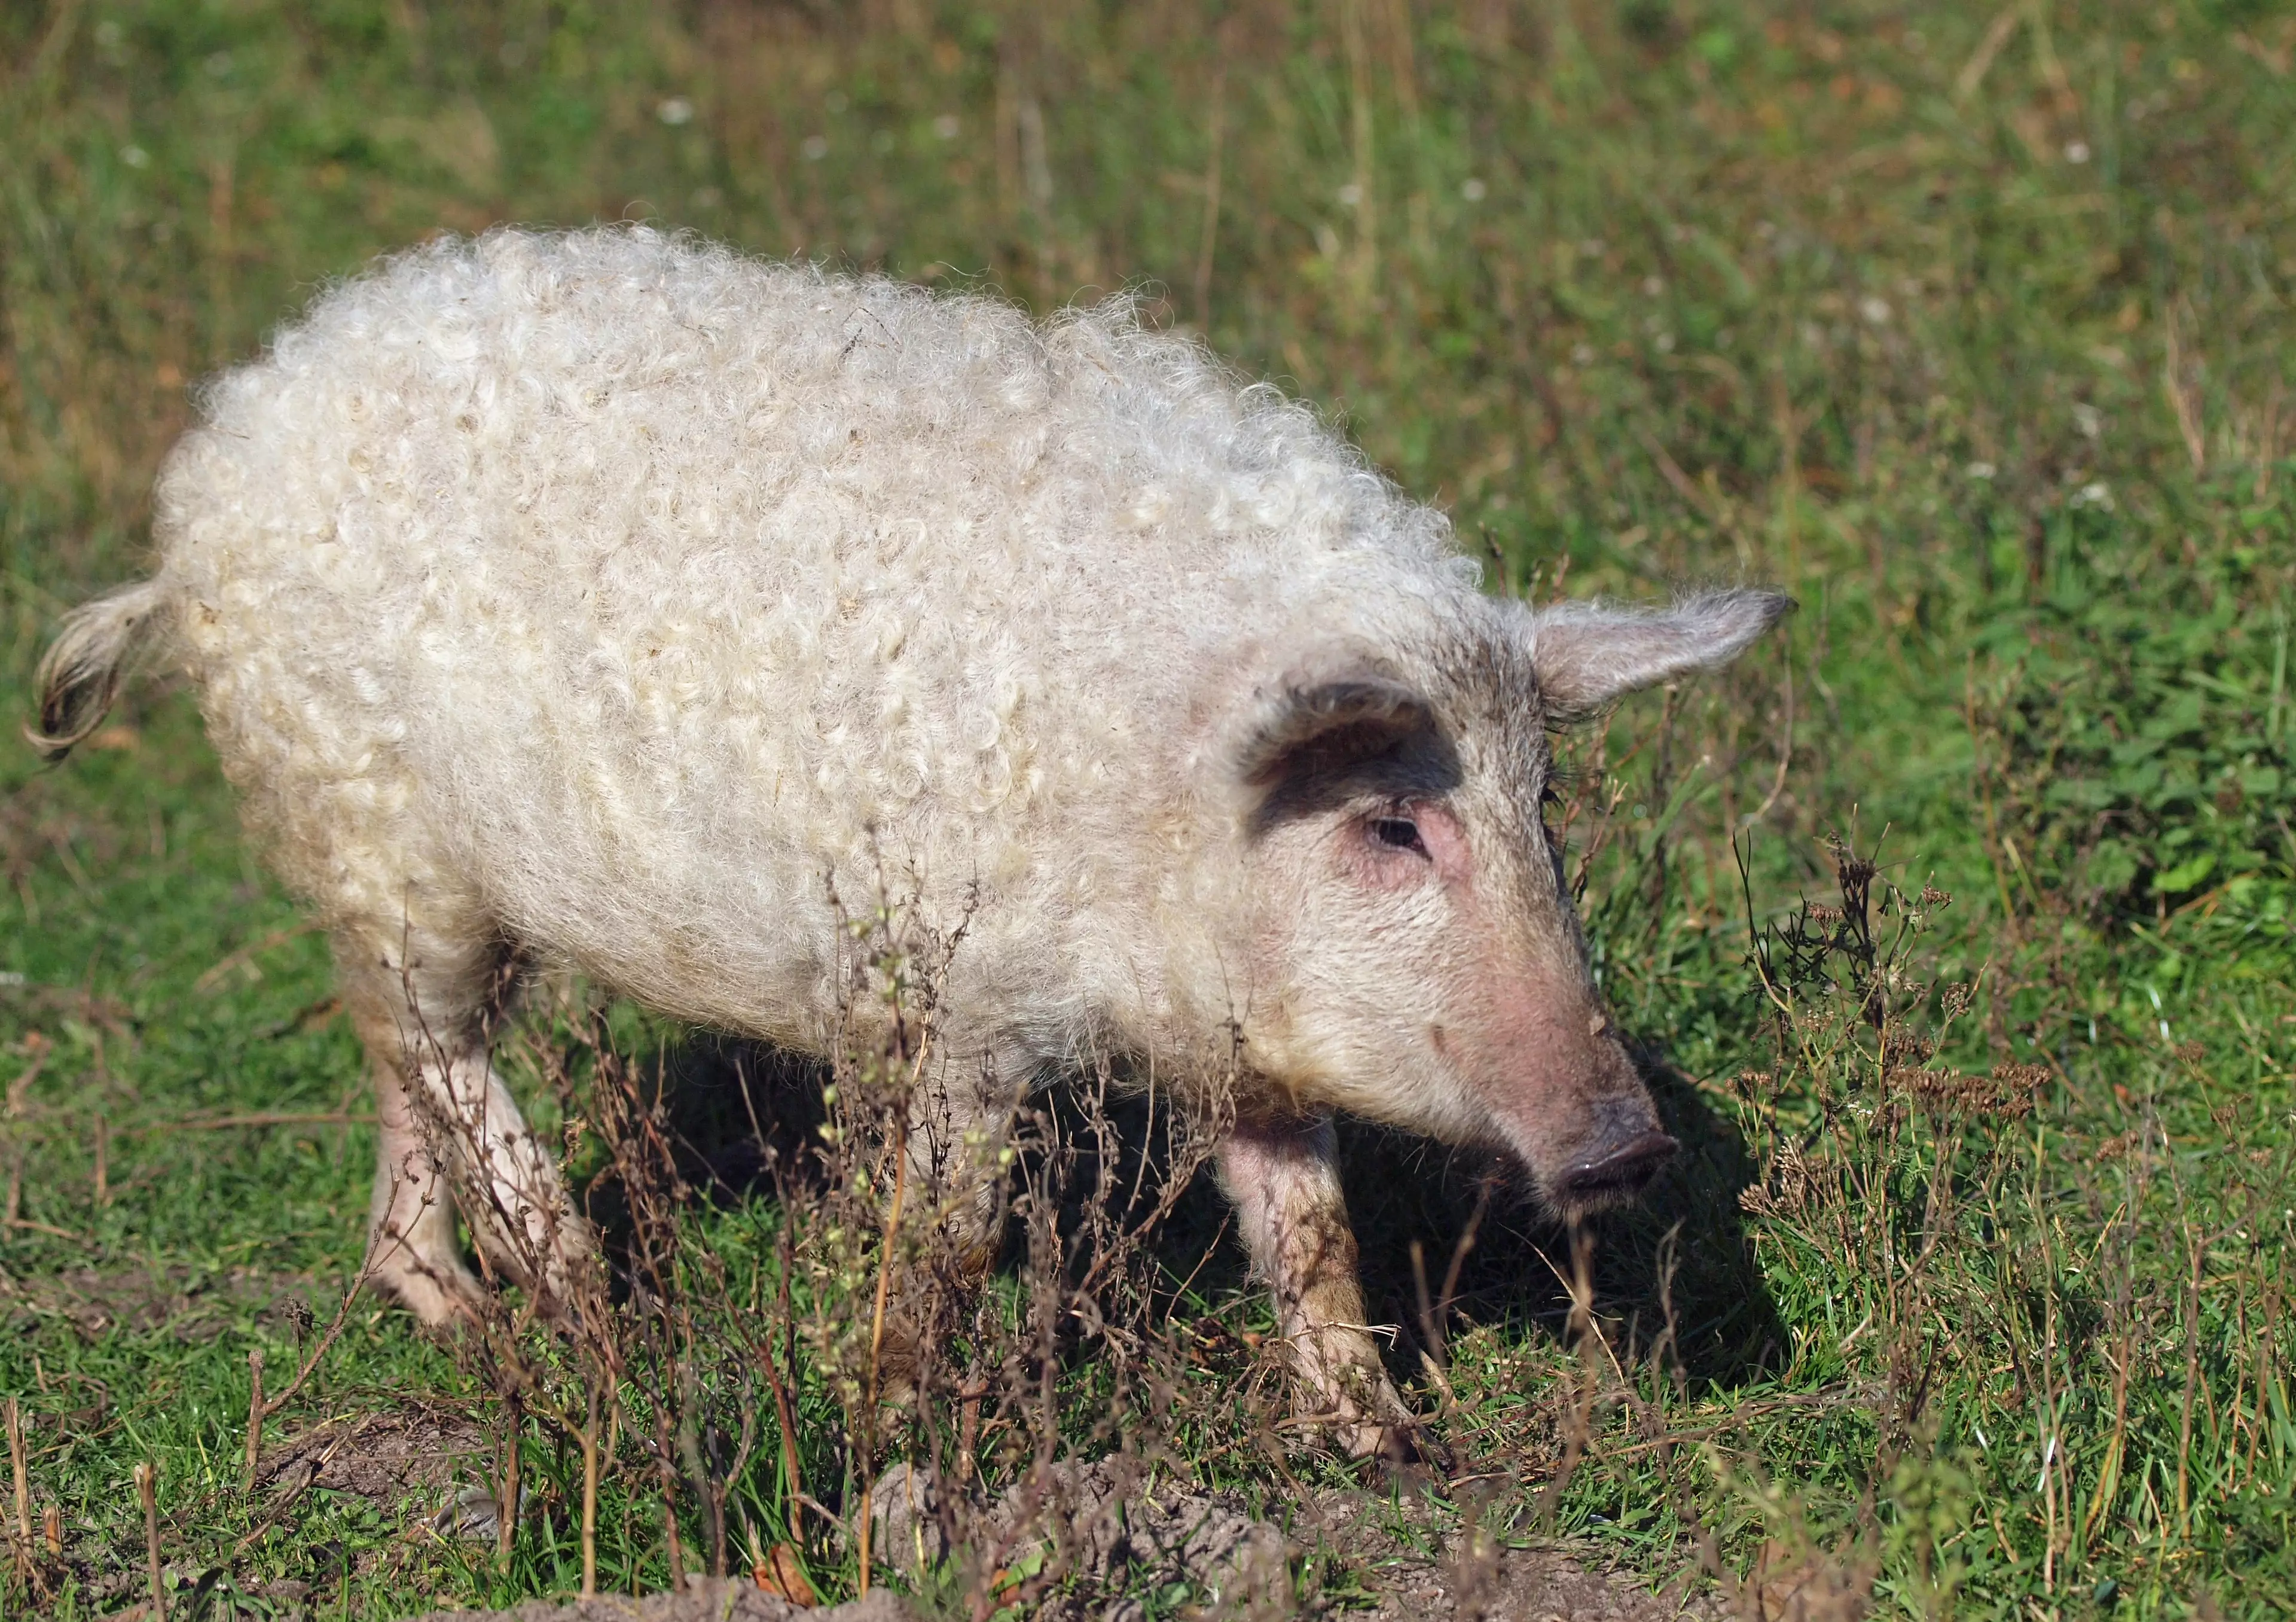 The Mangalitsa pig has a white, curly coat, just like a sheep's coat (